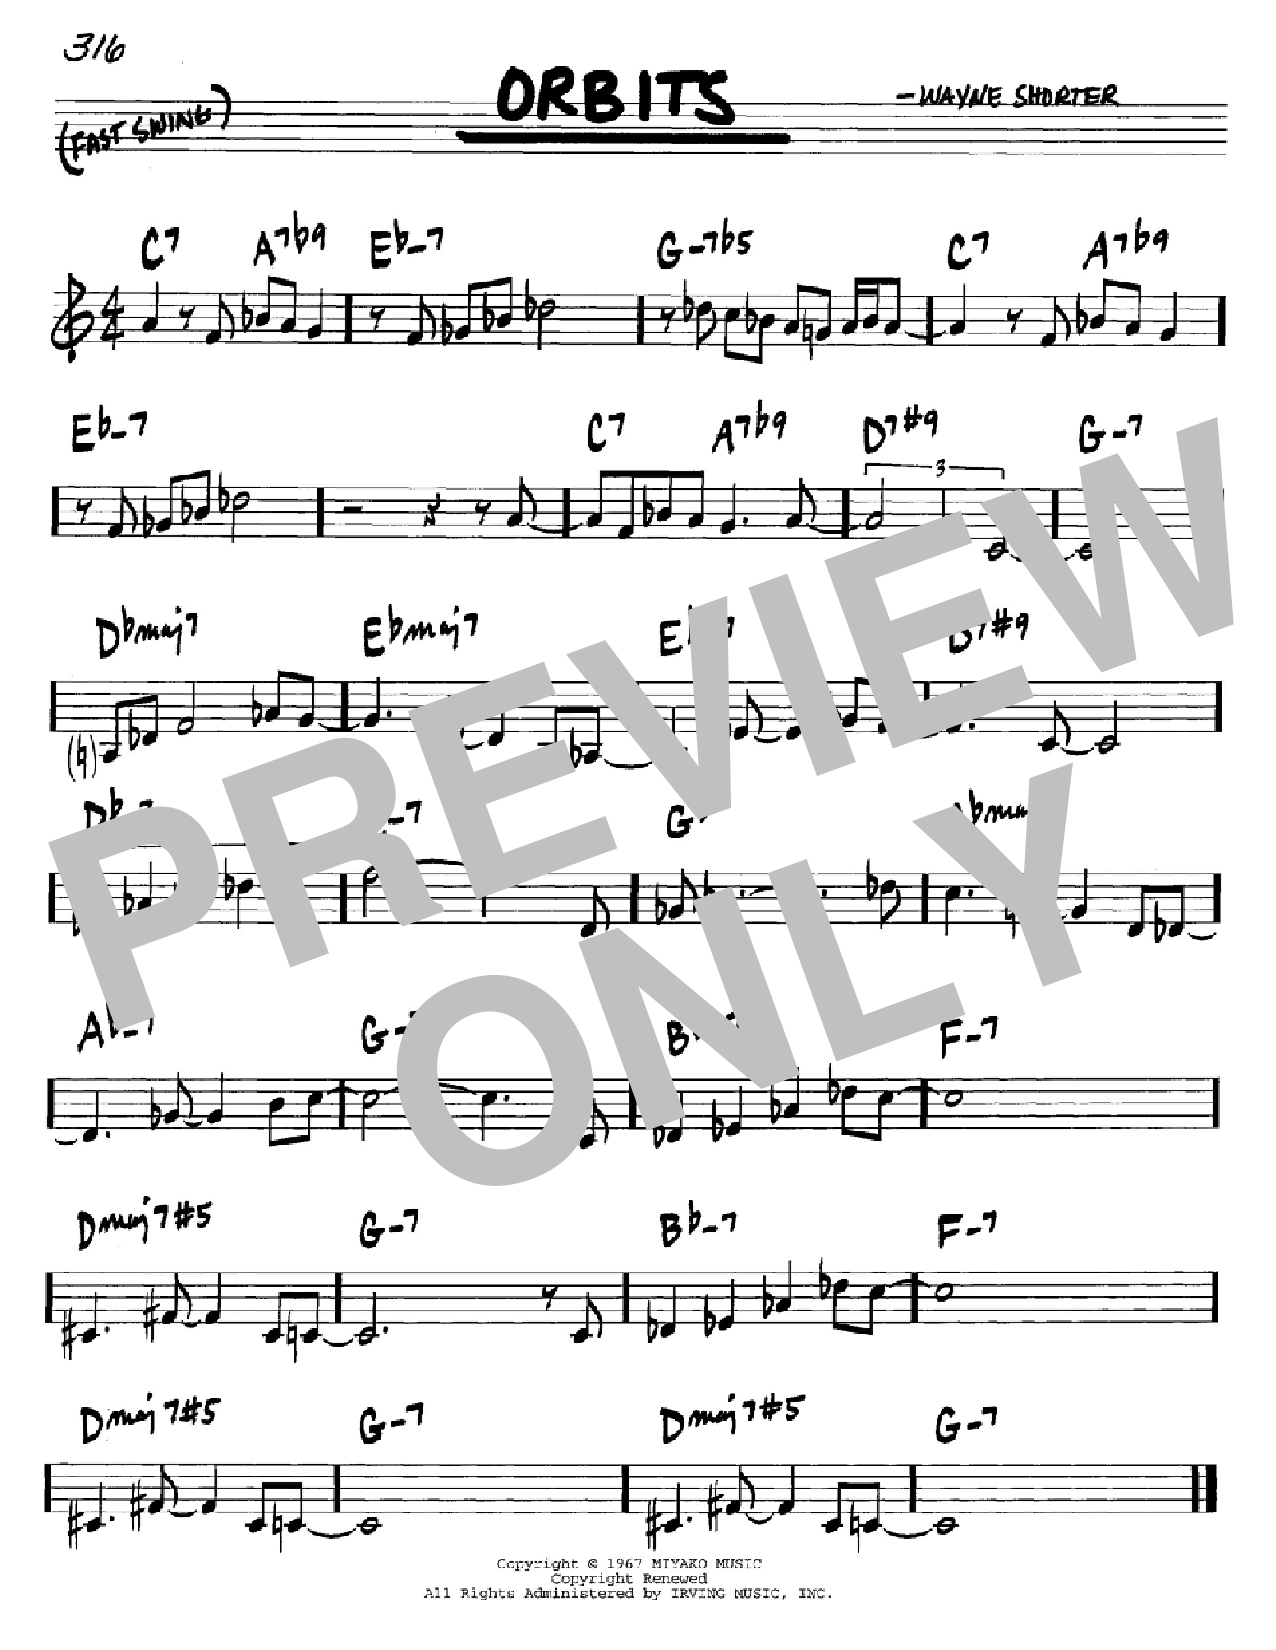 Wayne Shorter Orbits Sheet Music Notes & Chords for Real Book - Melody & Chords - Bb Instruments - Download or Print PDF